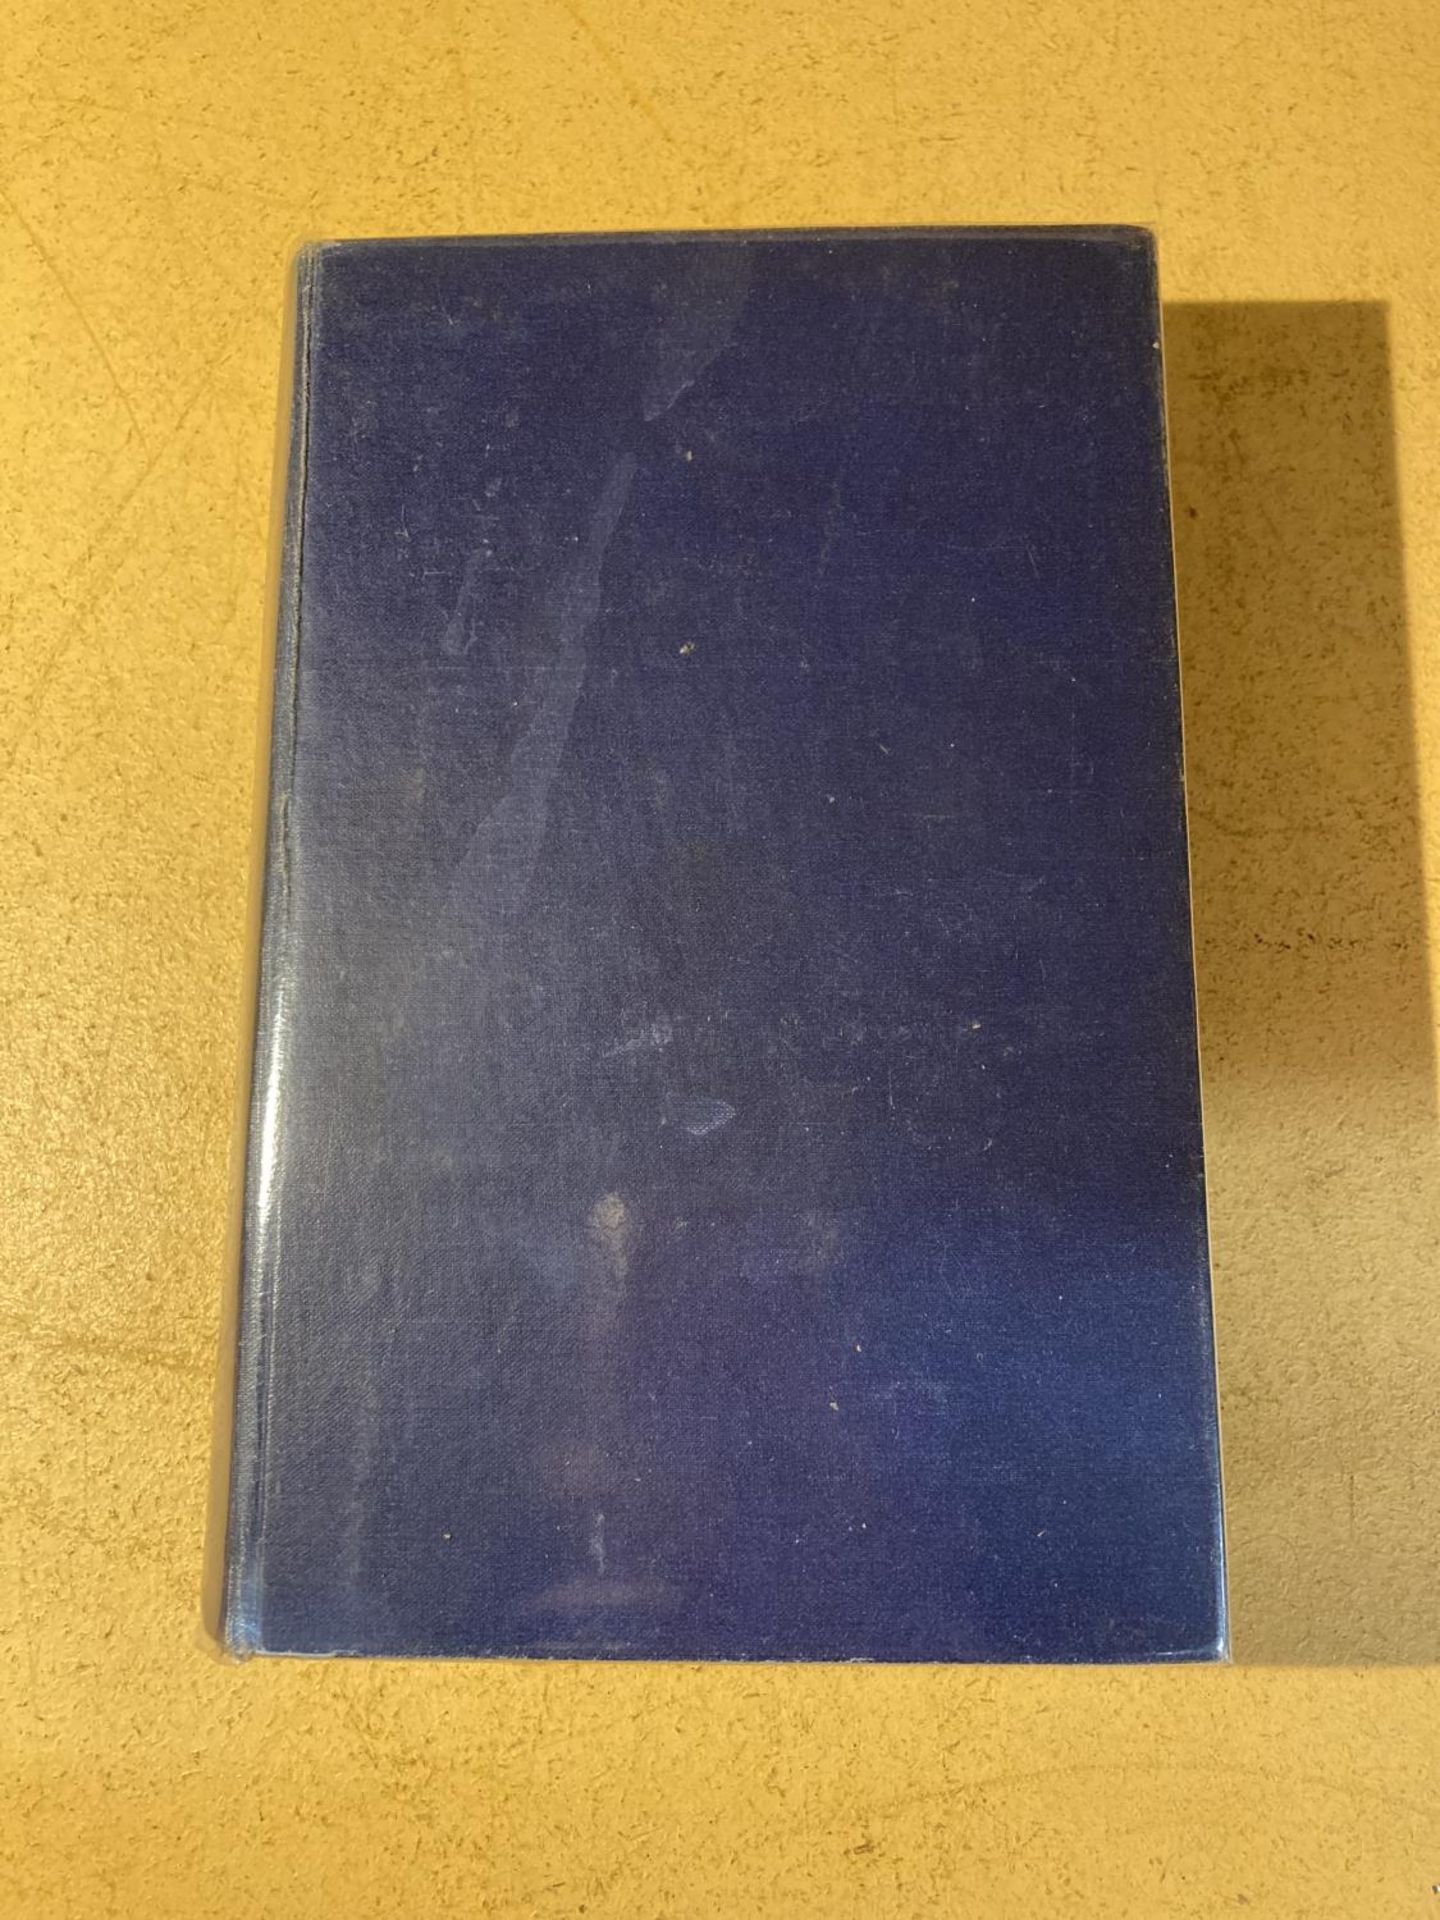 LORD LISTER - SIR RICKMAN JOHN GODLEE - 1917 PUBLISHED BY MACMILLAN